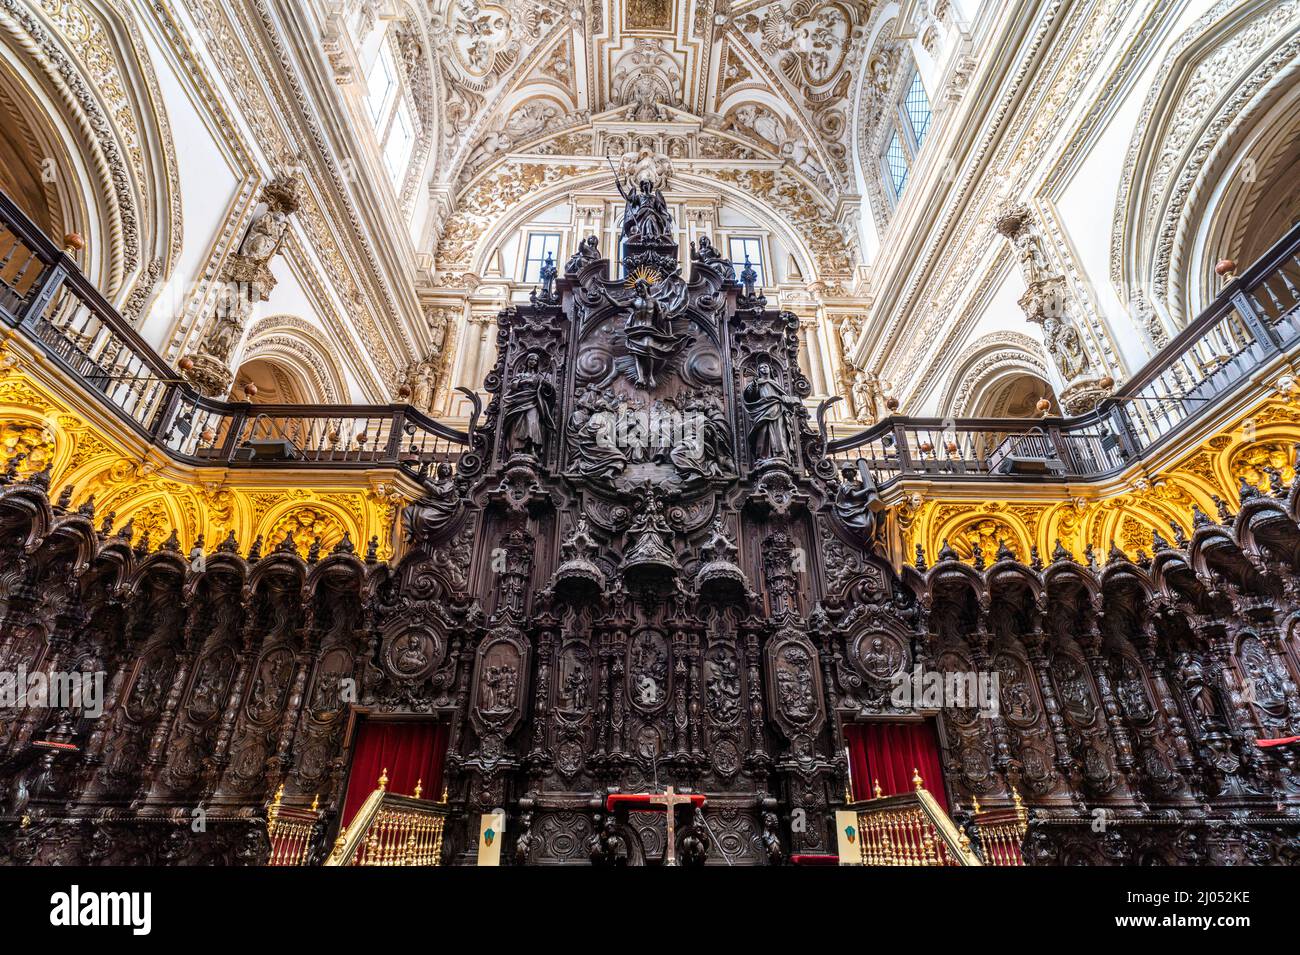 Chor im Innenraum der Kathedrale - Mezquita - Catedral de Córdoba in Cordoba, Andalusien, Spanien | Chor der Kathedrale - Mezquita - Moschee–Kath Stockfoto